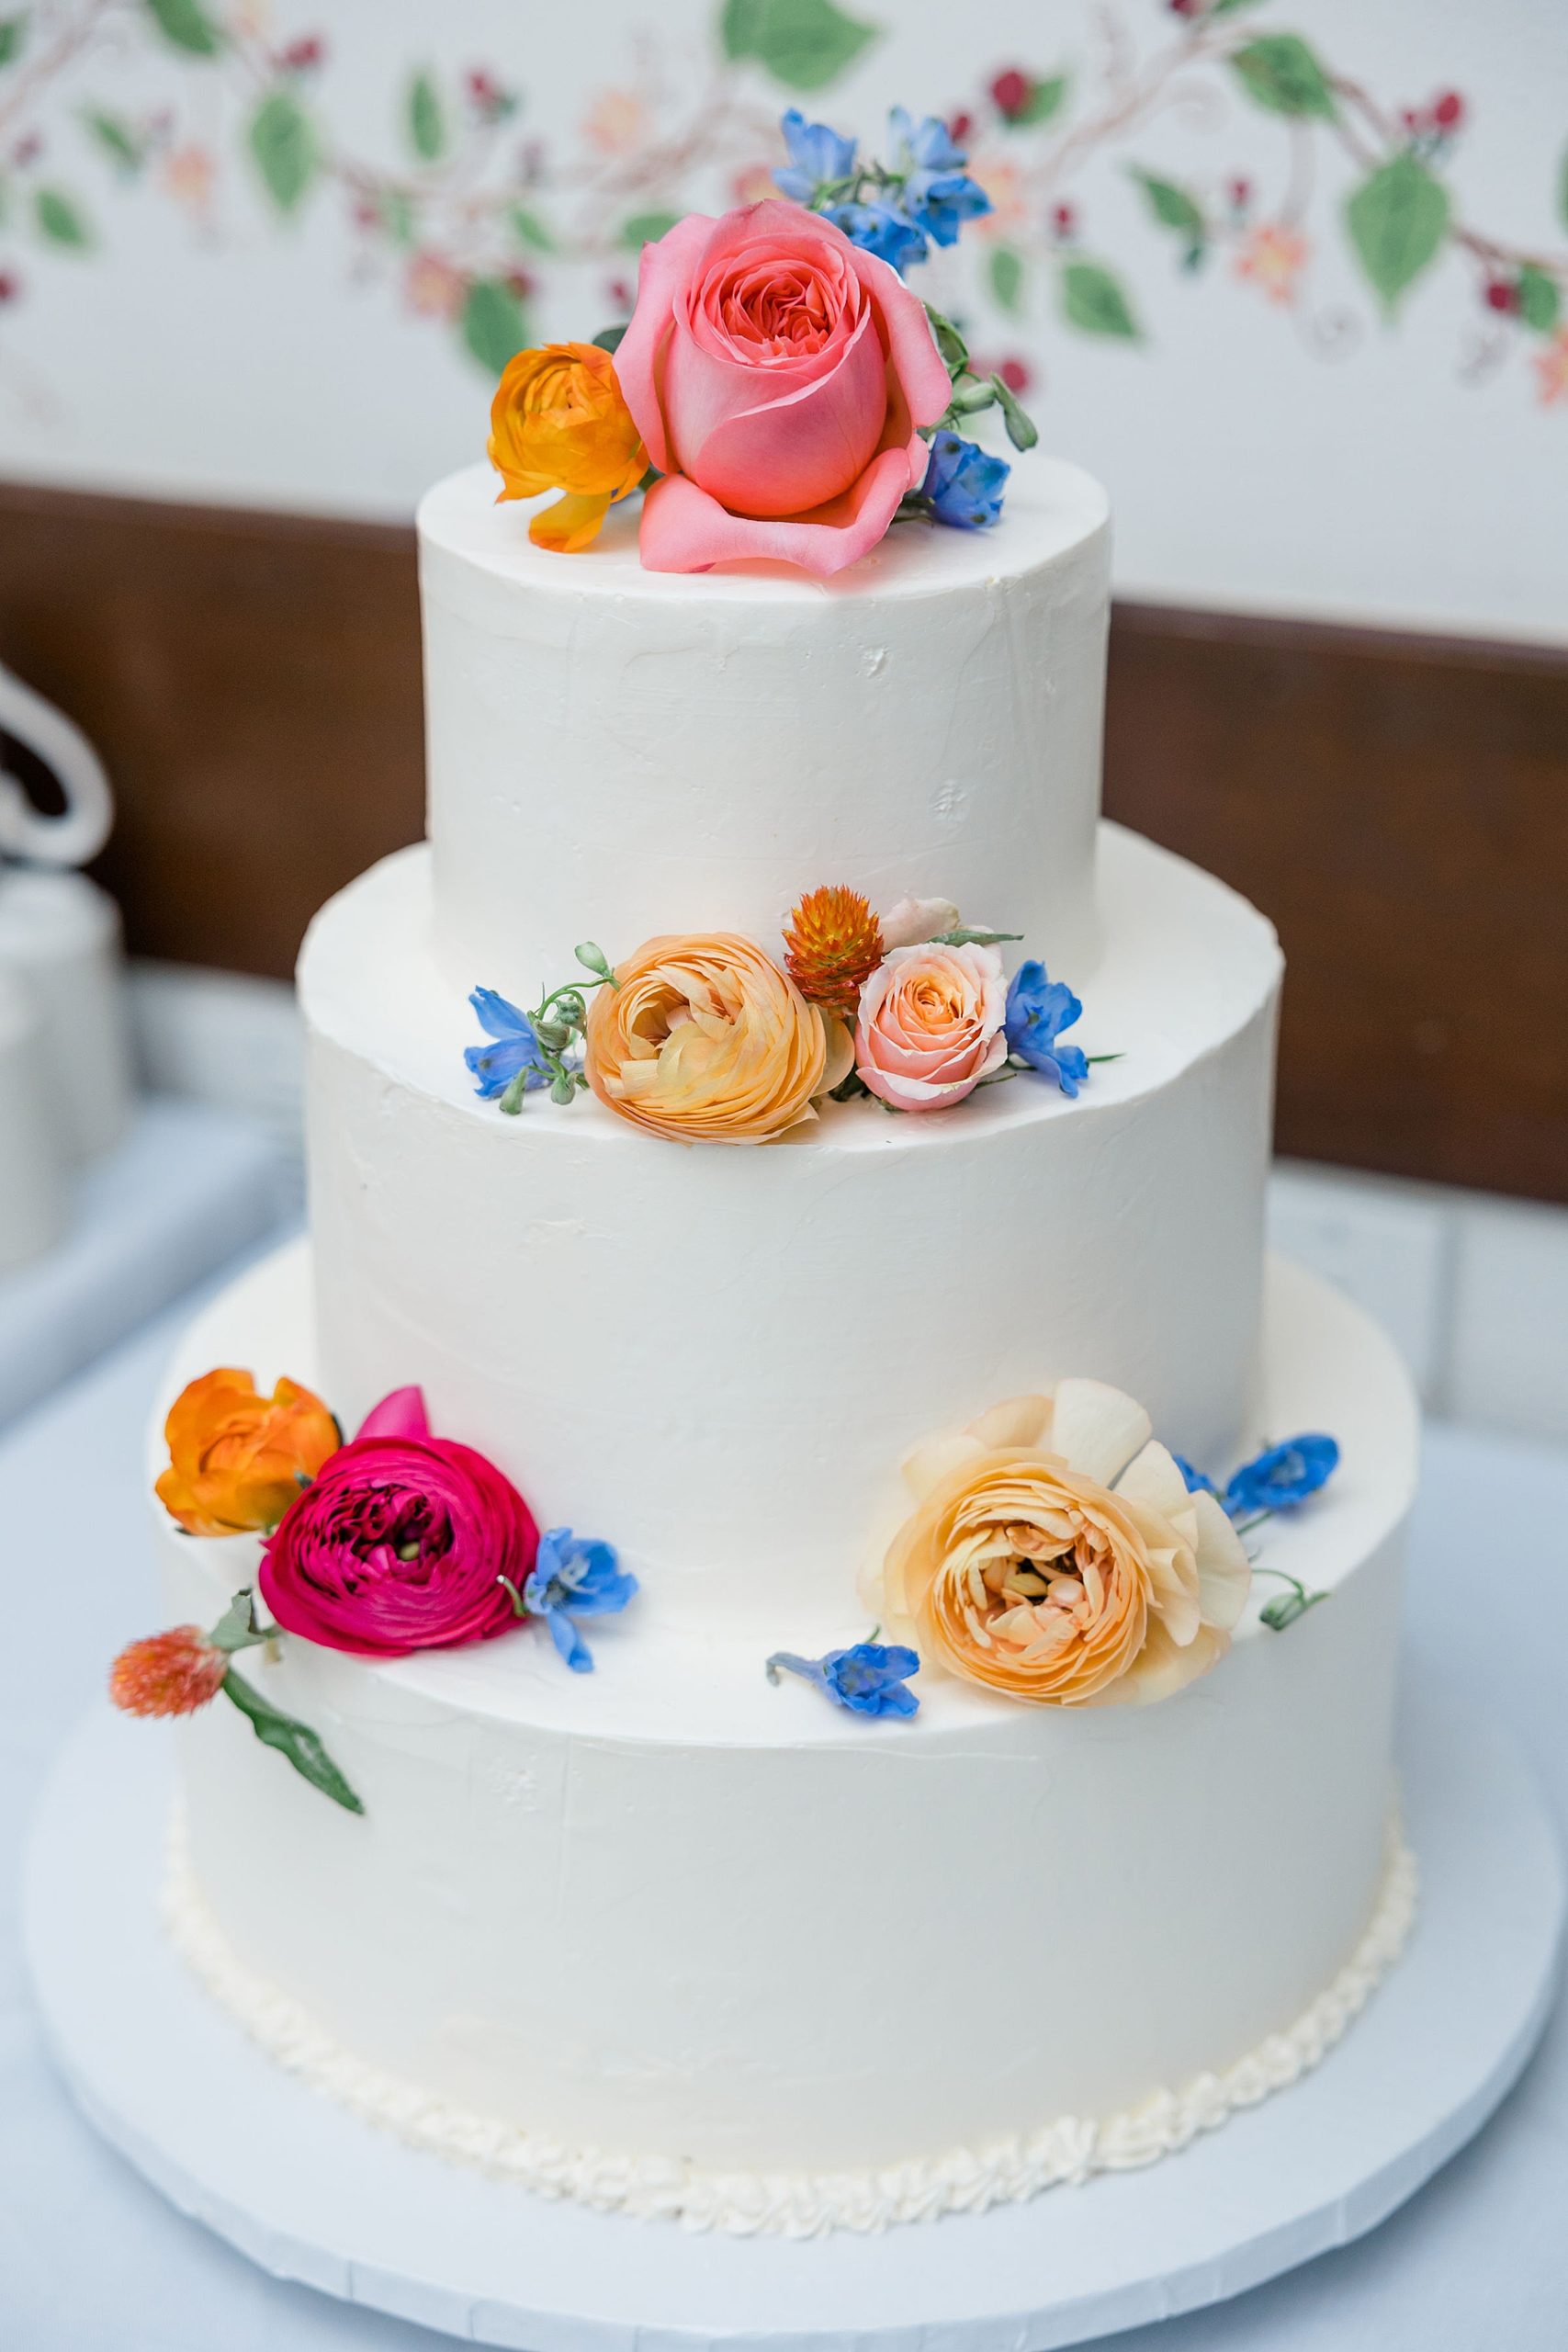 classic three tier wedding cake with vibrant flowers